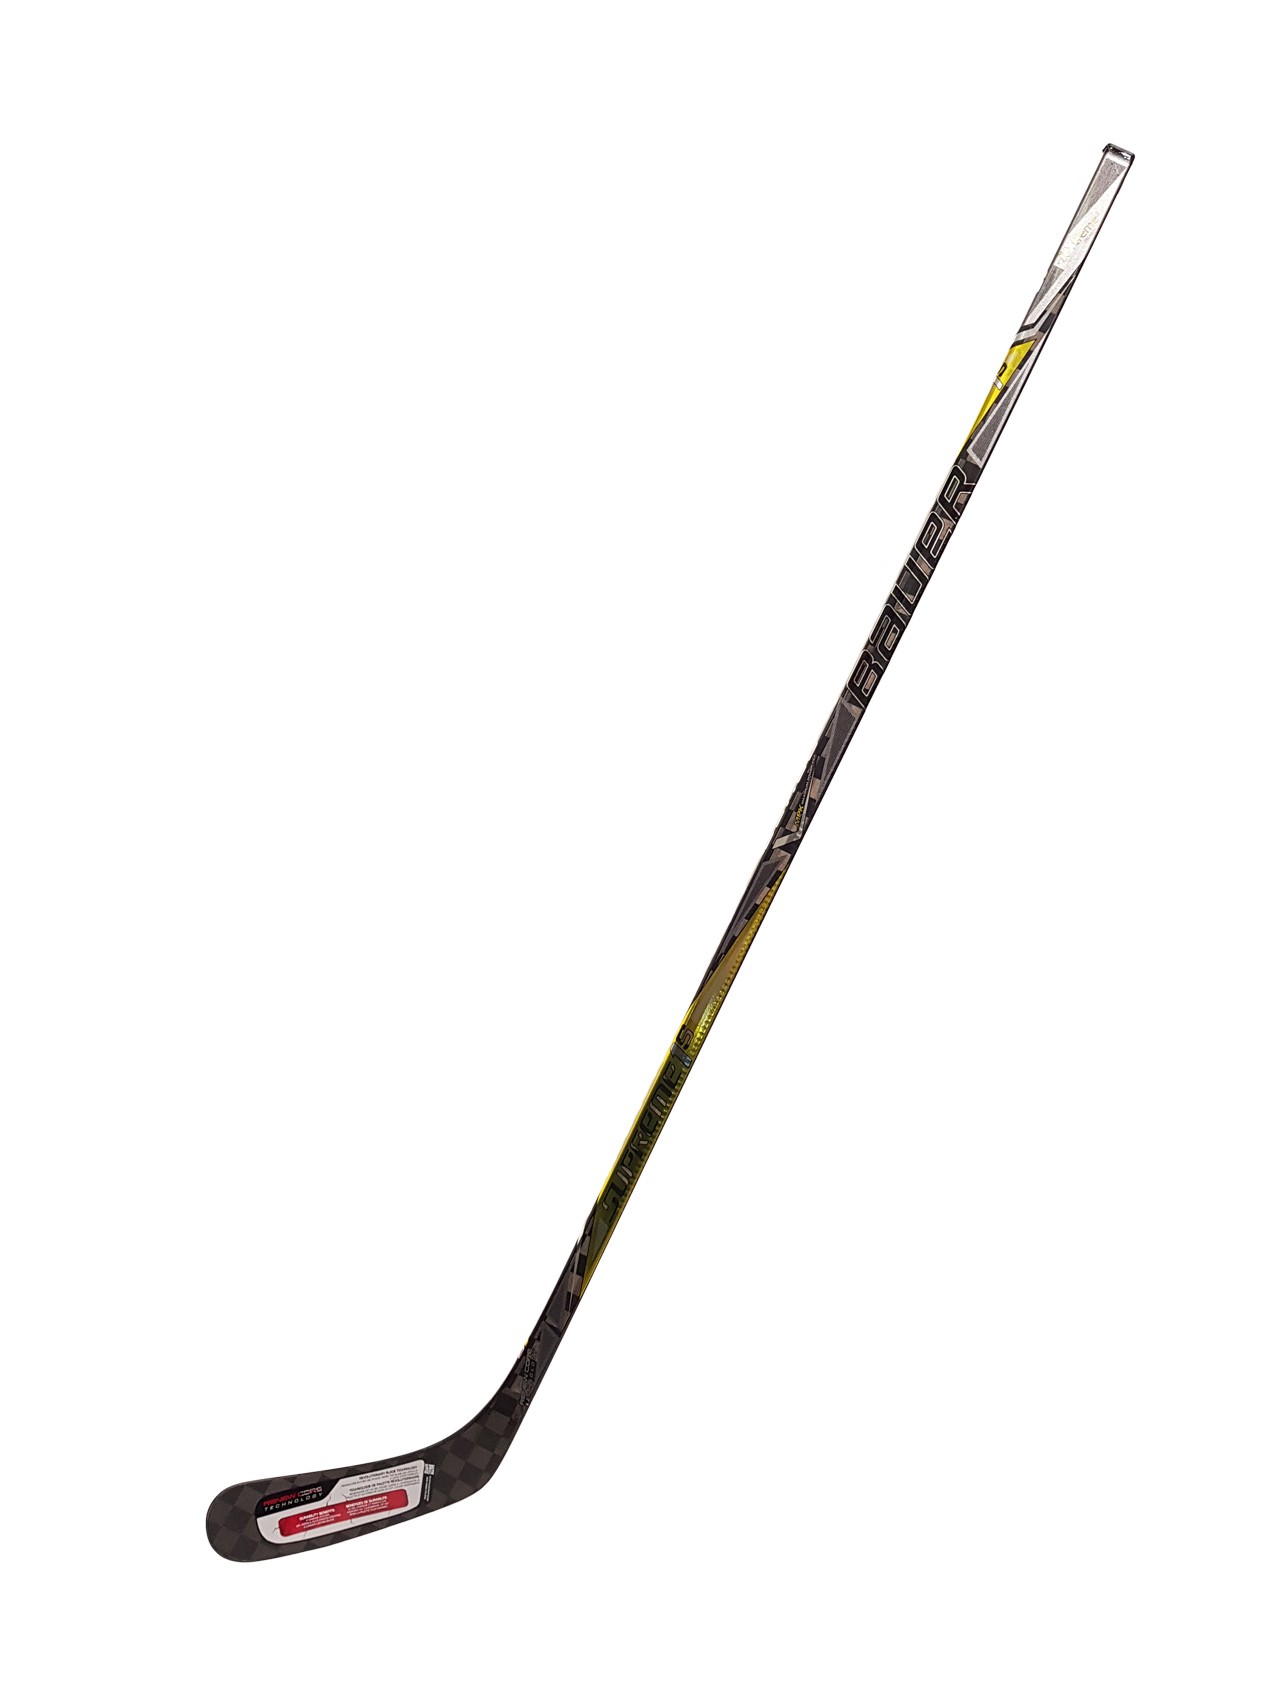 BAUER Supreme 1S S17 Senior Composite Hockey Stick